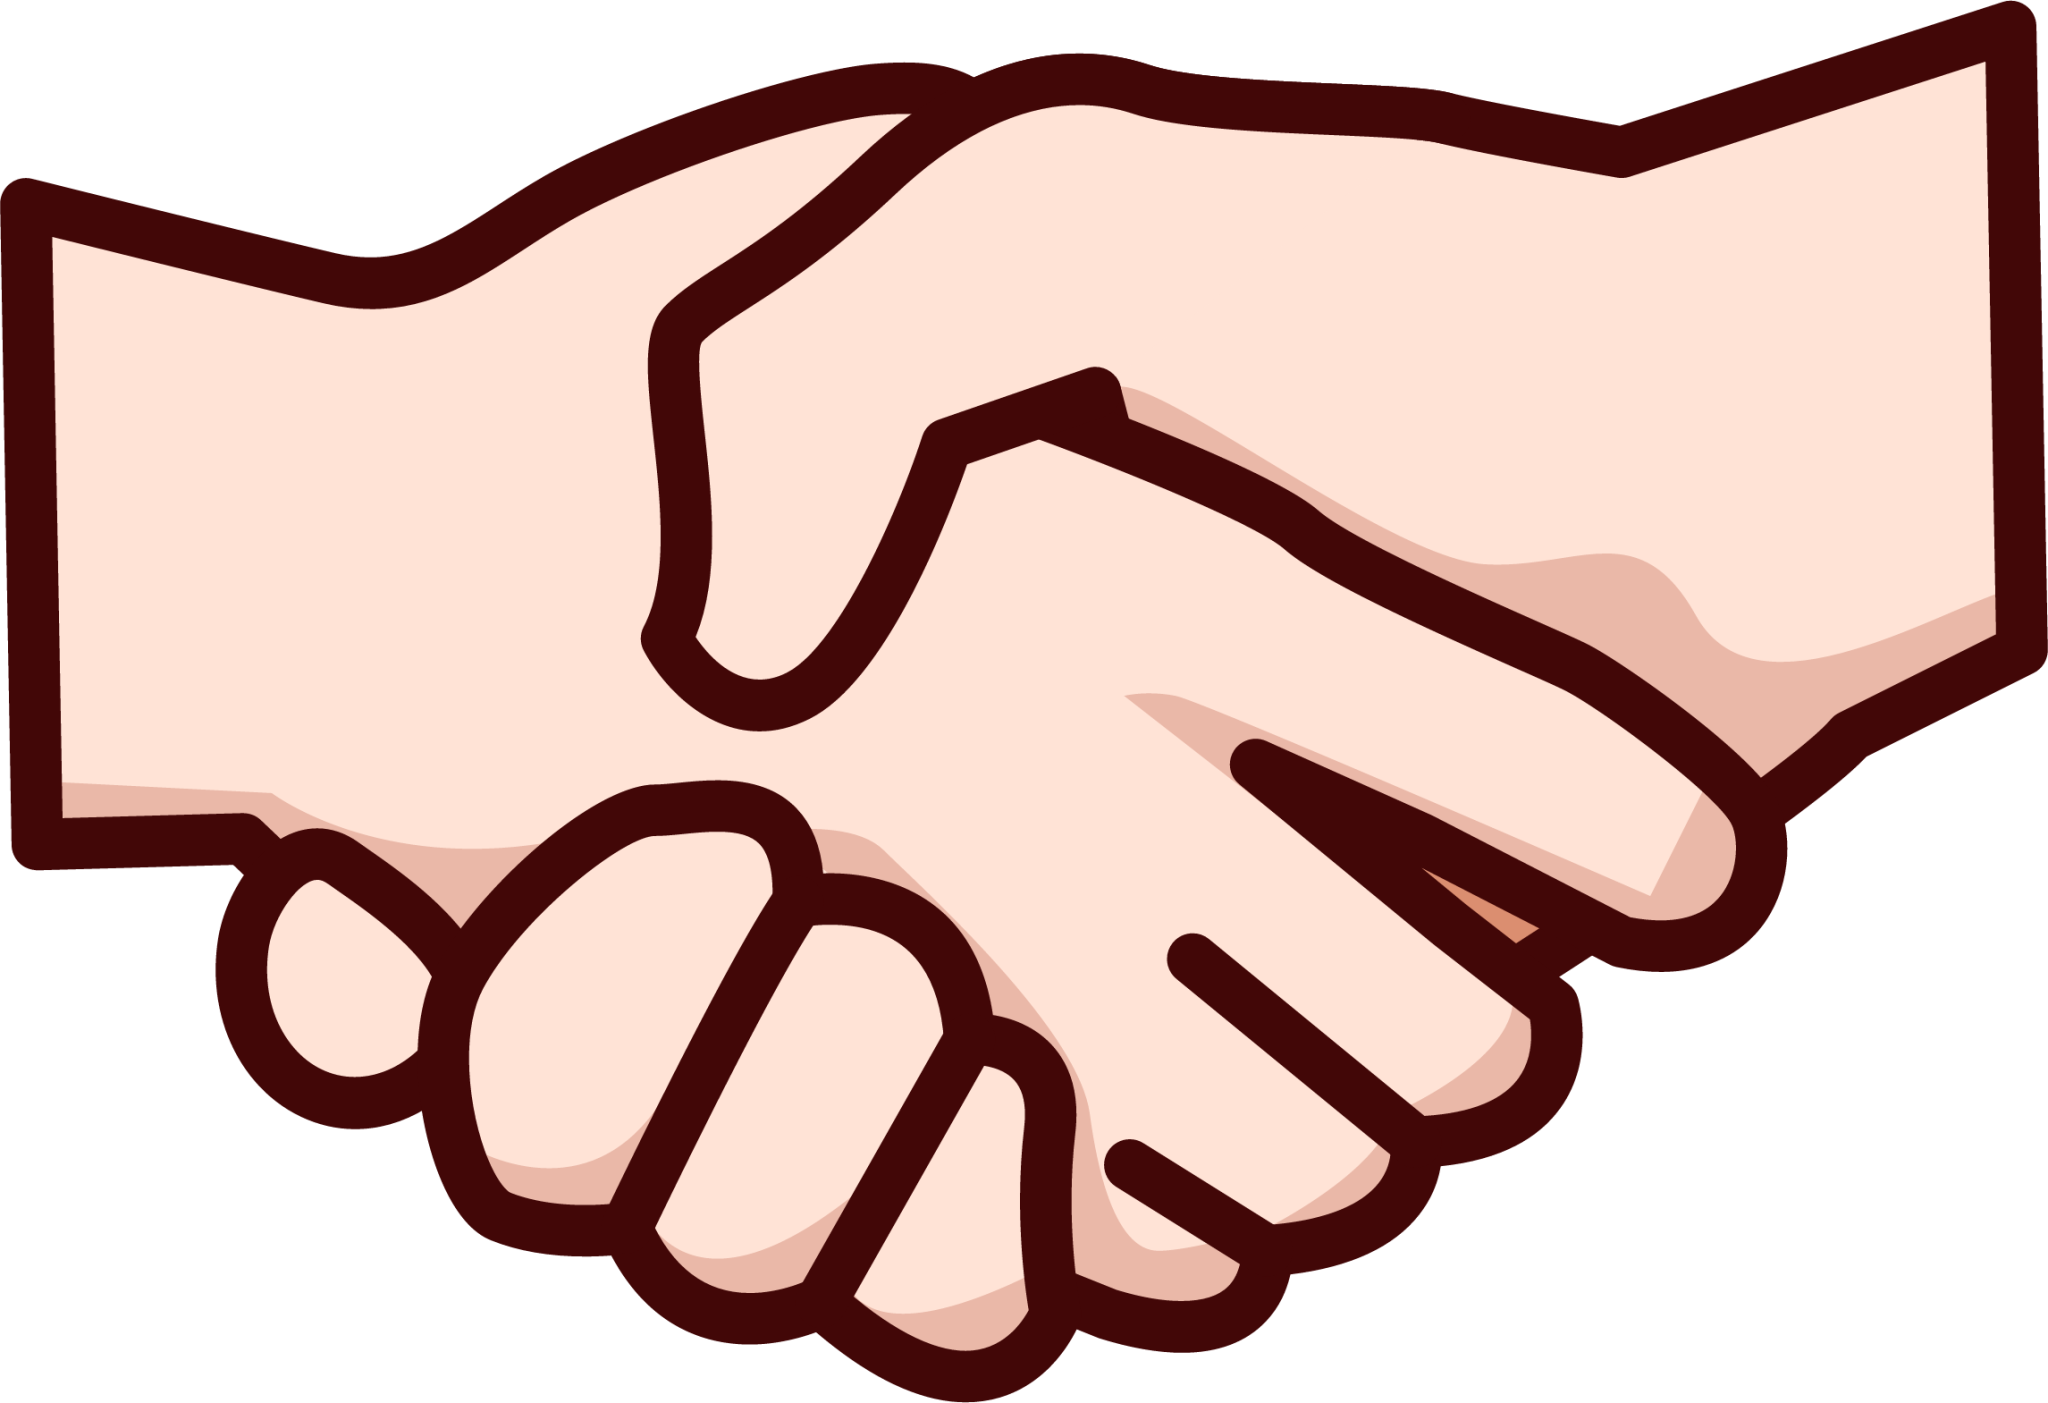 Both hands doing hand shaking gesture art, Emojipedia Gesture Handshake,  Emoji transparent background PNG clipart